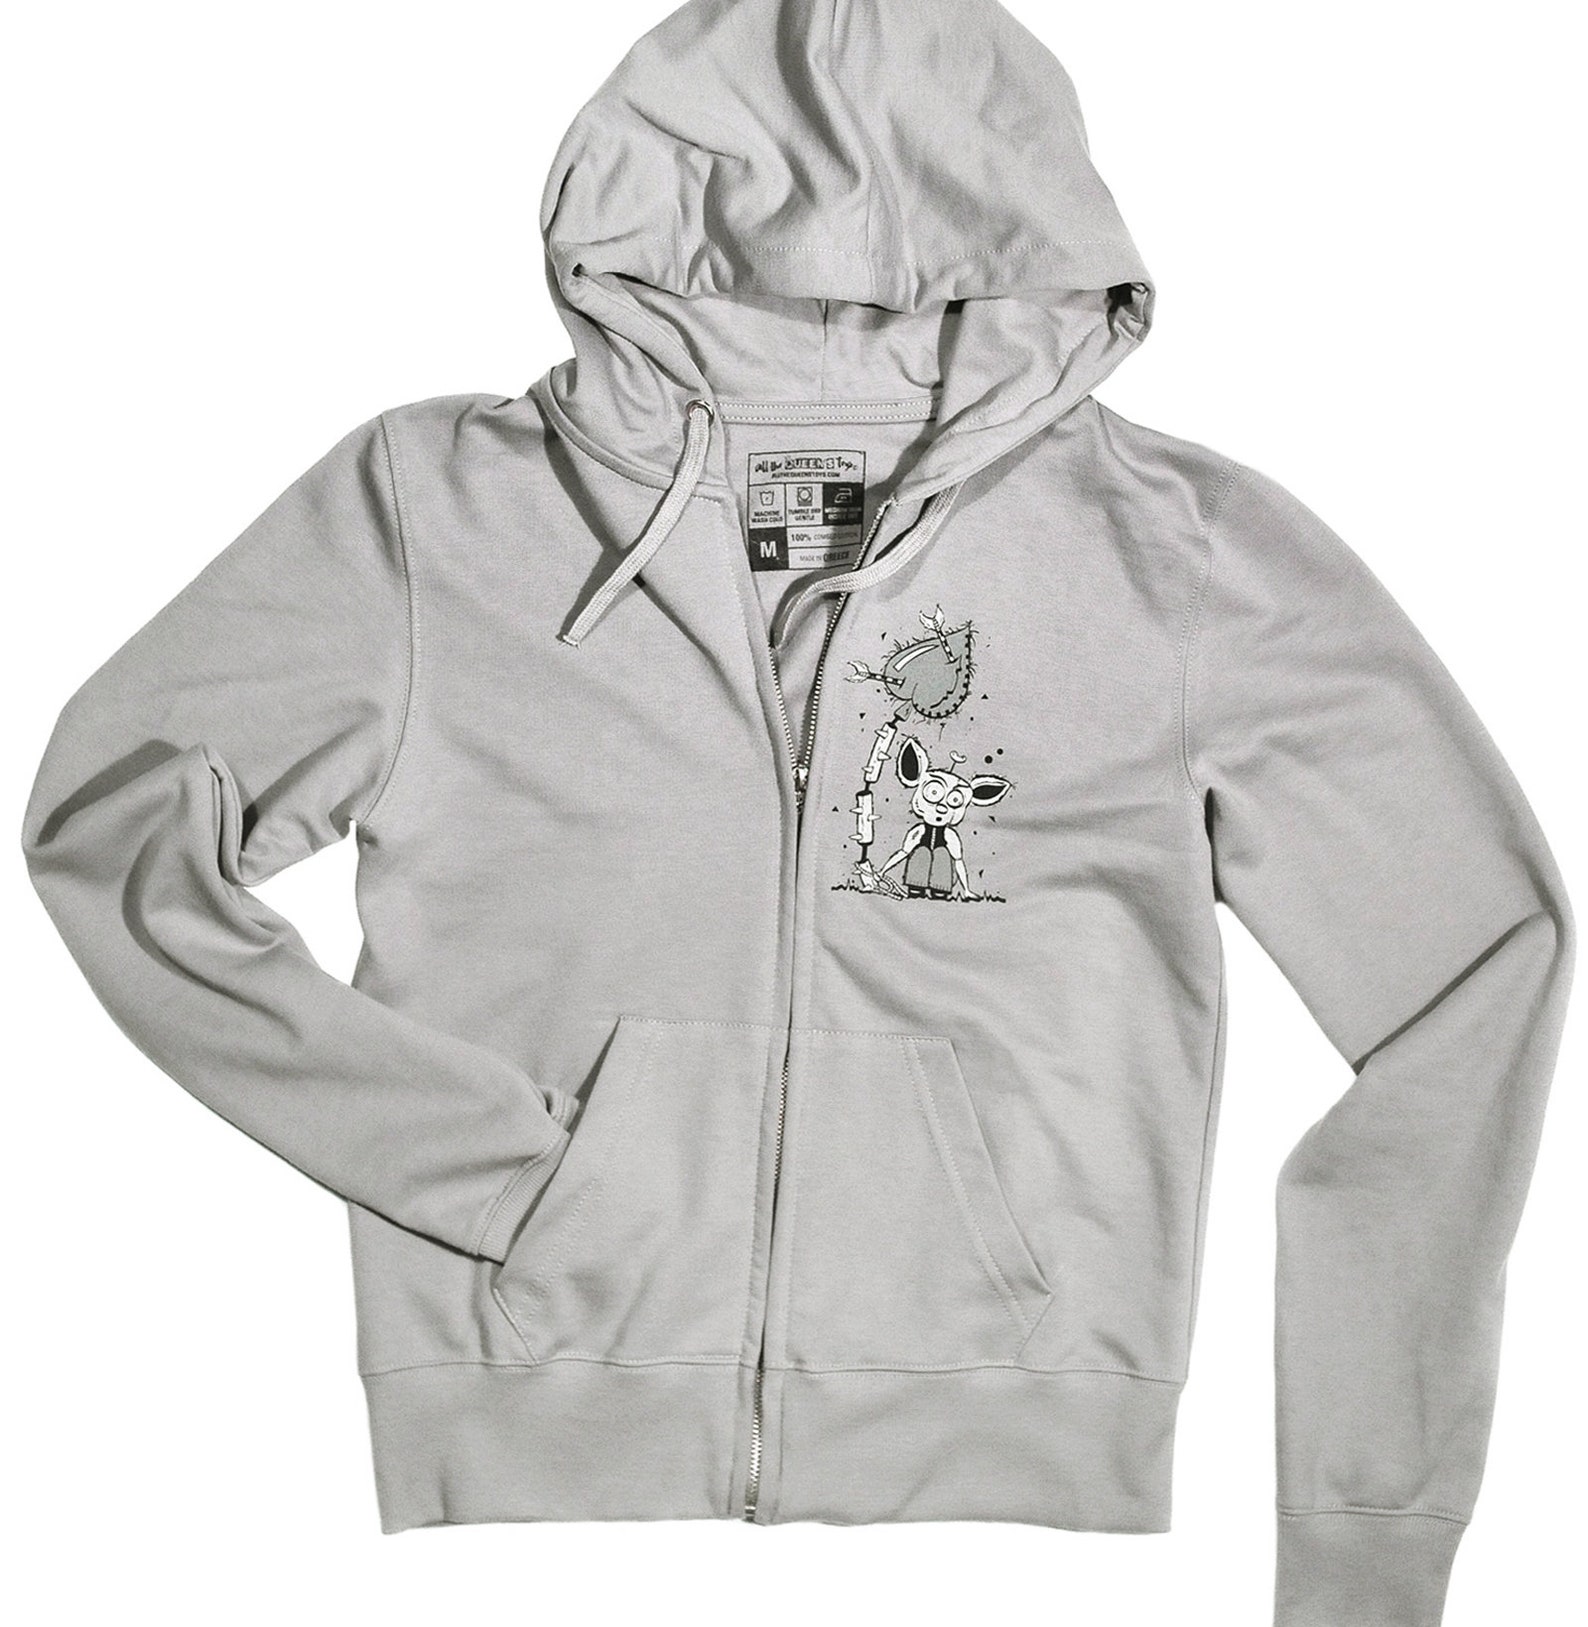 Graphic hoodie. zip up hoodie. lightweight jacket. comfy | Etsy